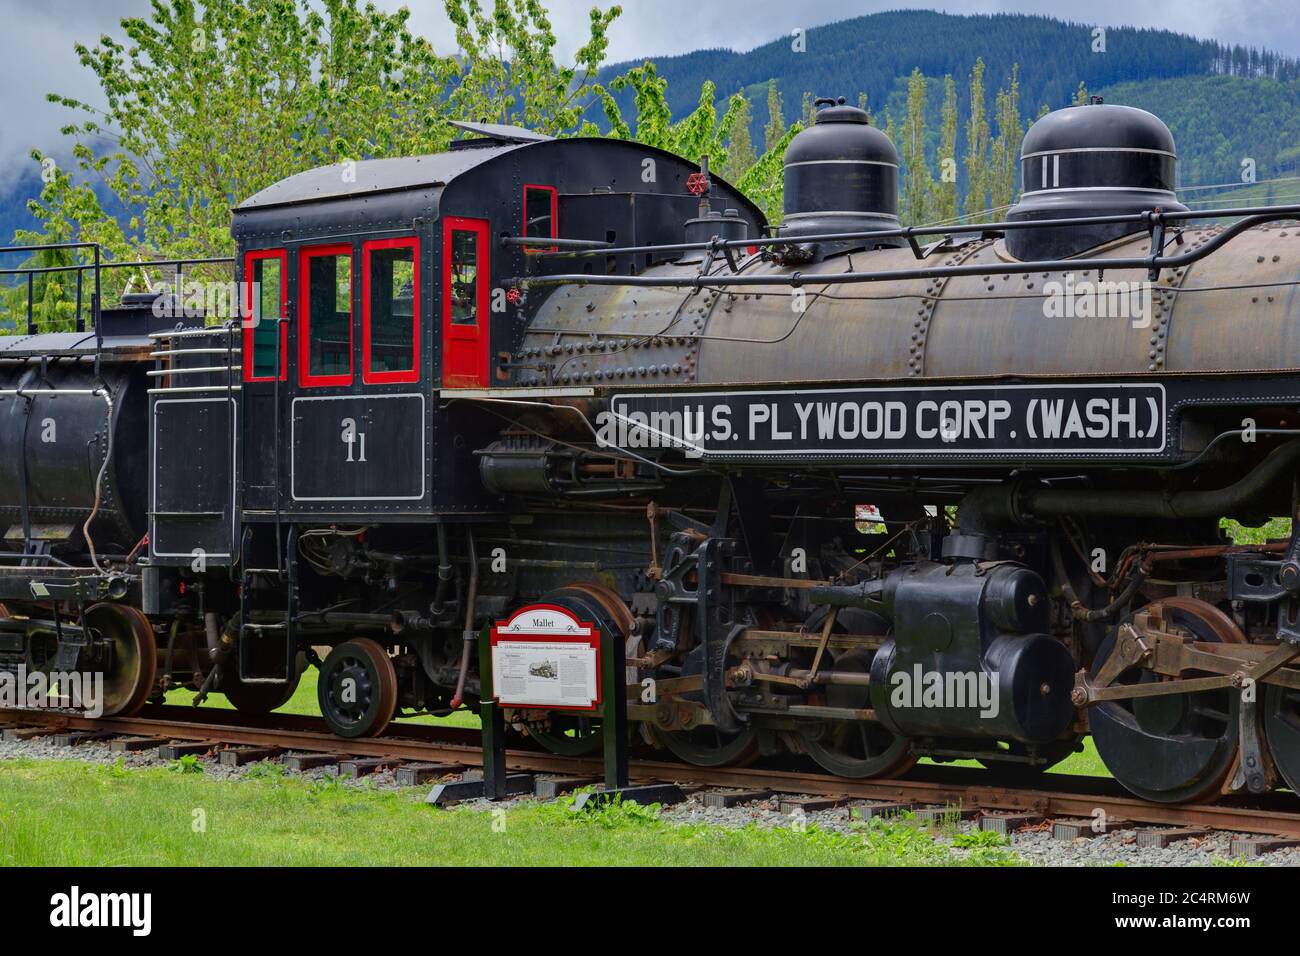 Northern Pacific Railway Museum, Snoqualmie, Seattle, Washington State, USA Stockfoto